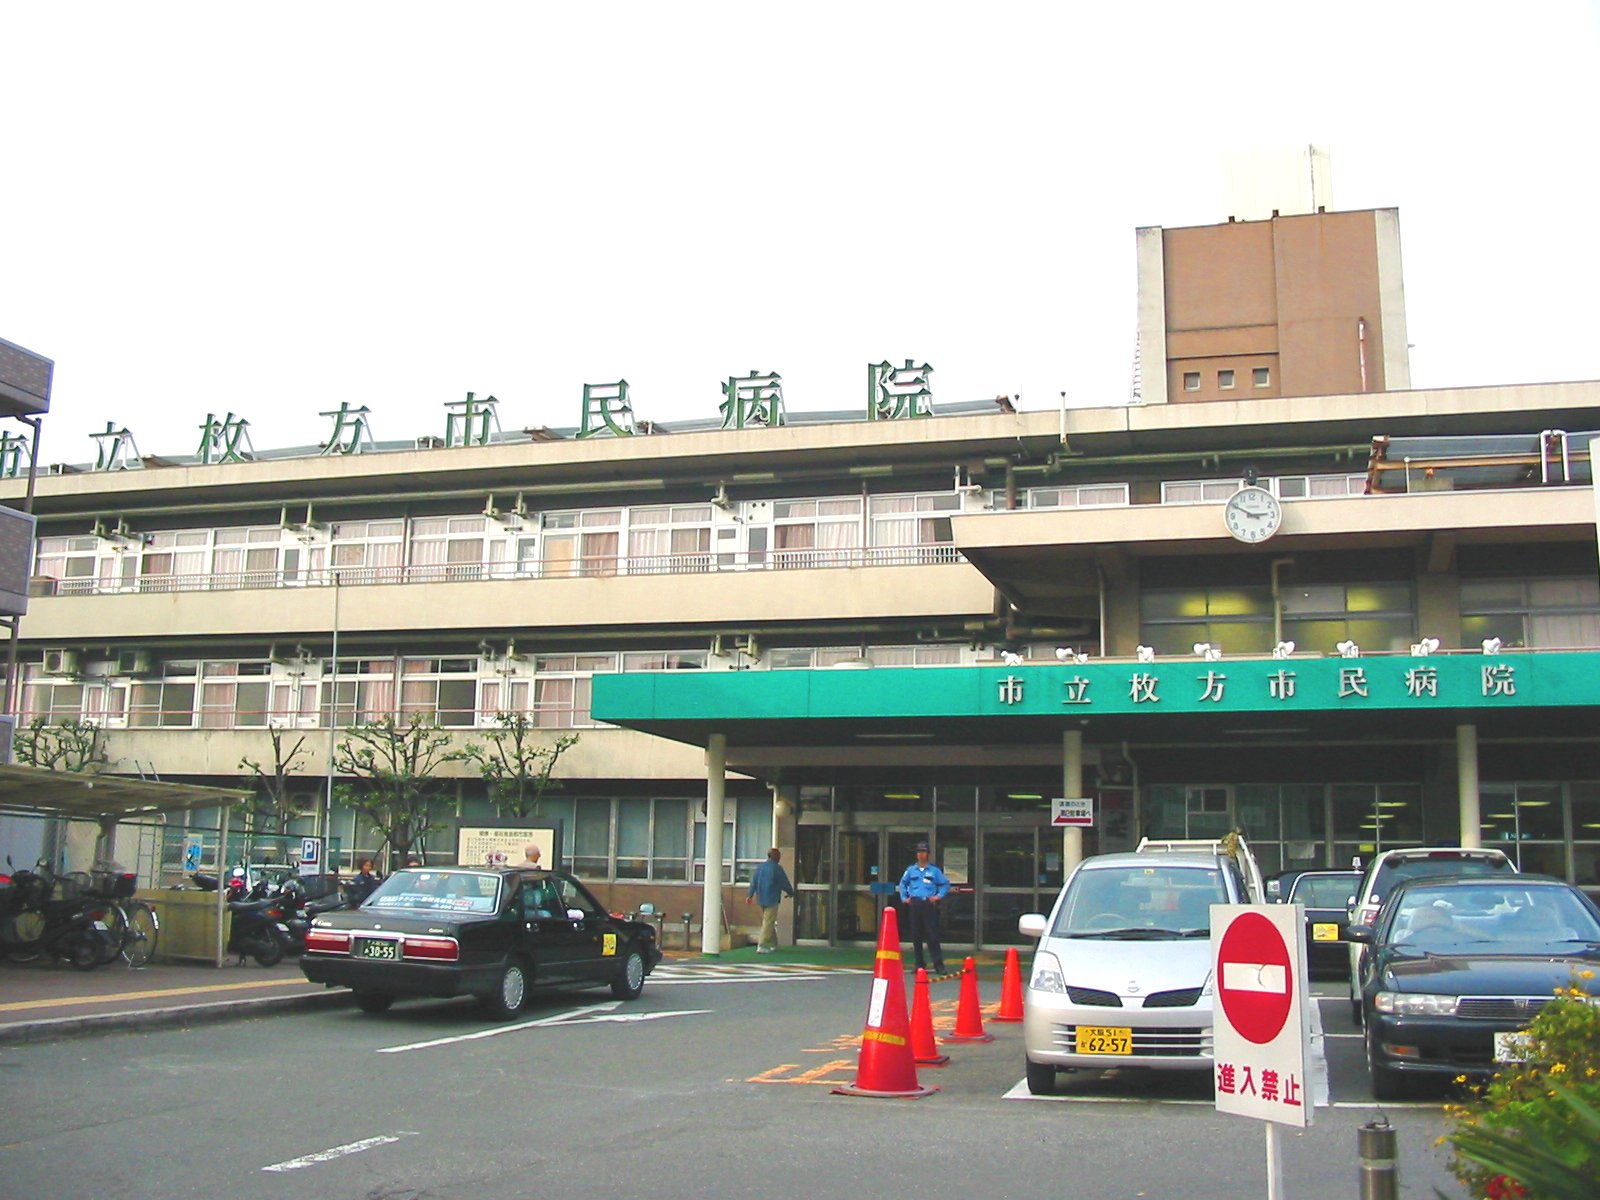 Hospital. 1072m to Hirakata Municipal Hospital (Hospital)